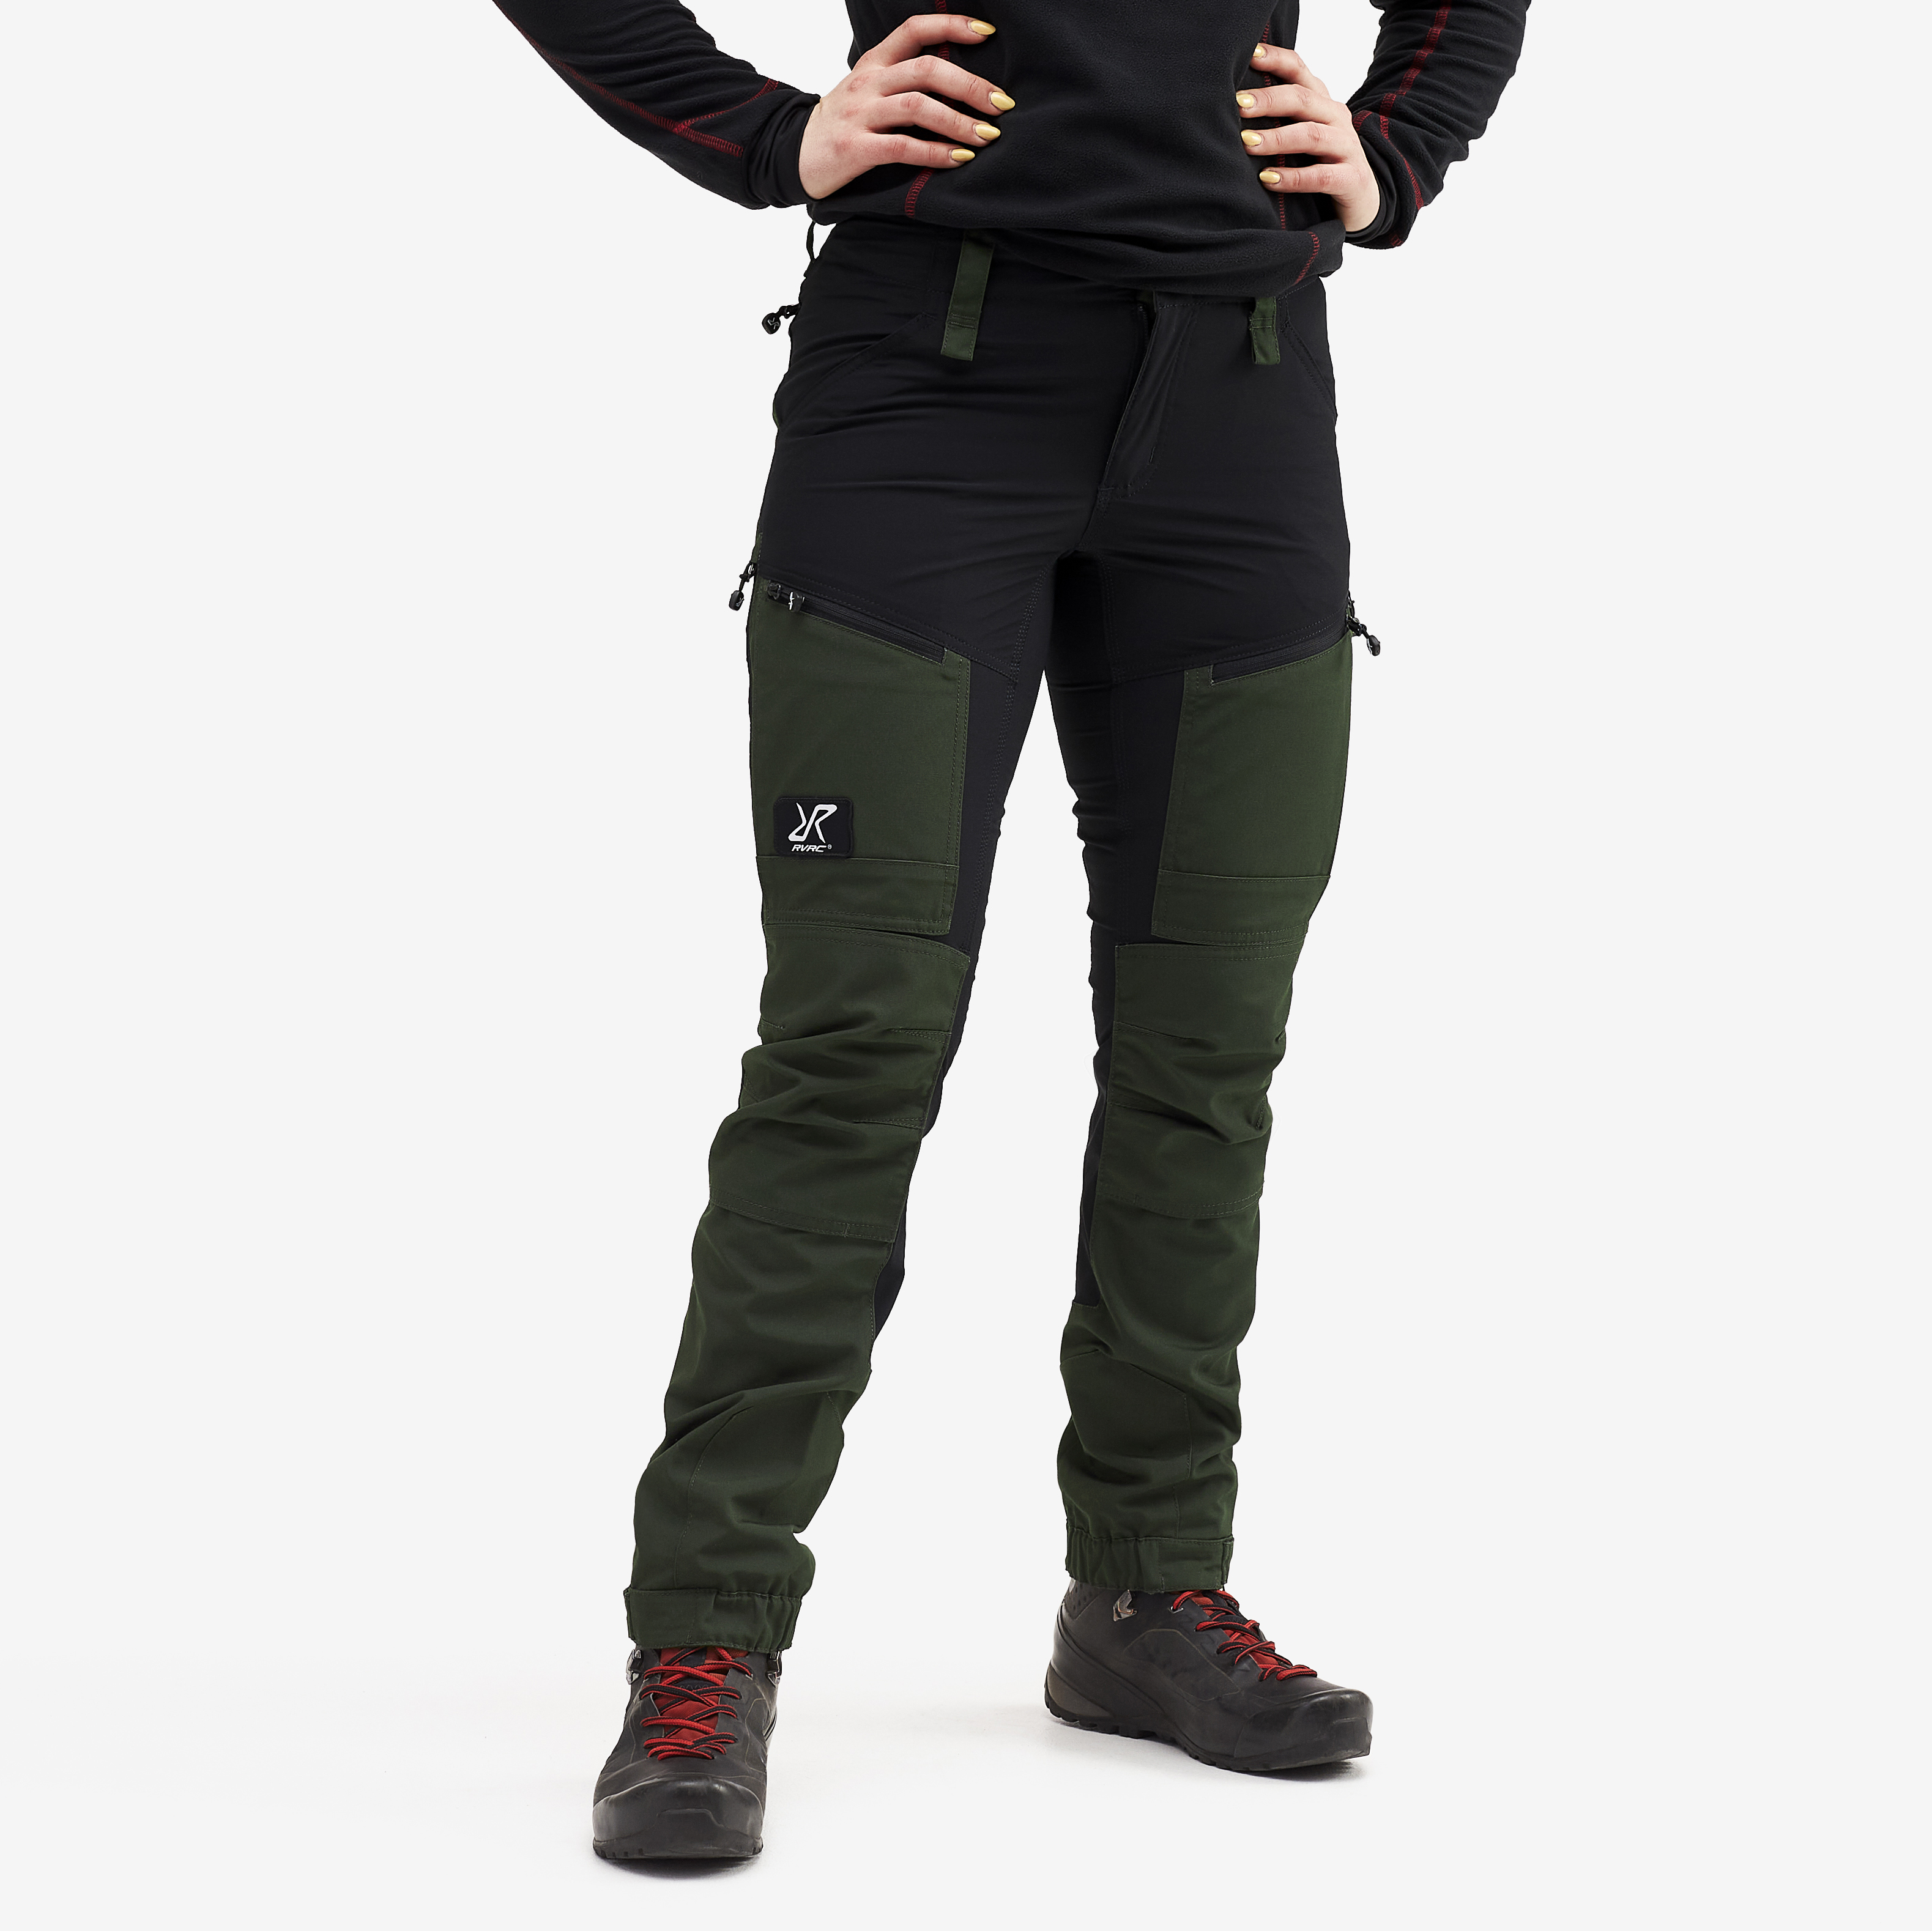 RVRC GP Pro Short hiking trousers for women in green